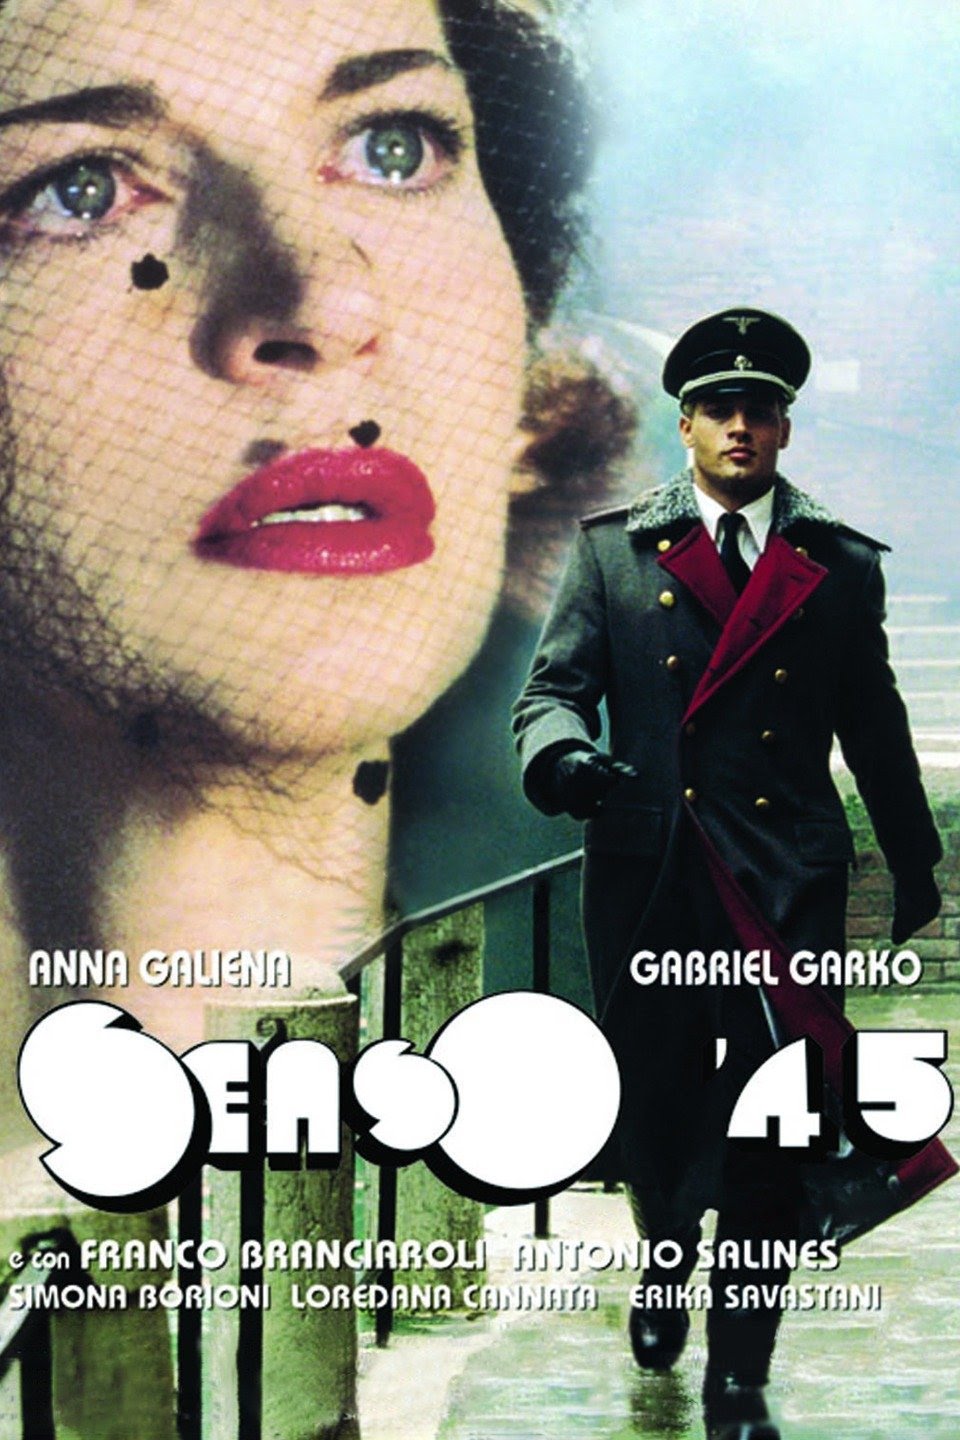 Senso ’45 [HD] (2001)